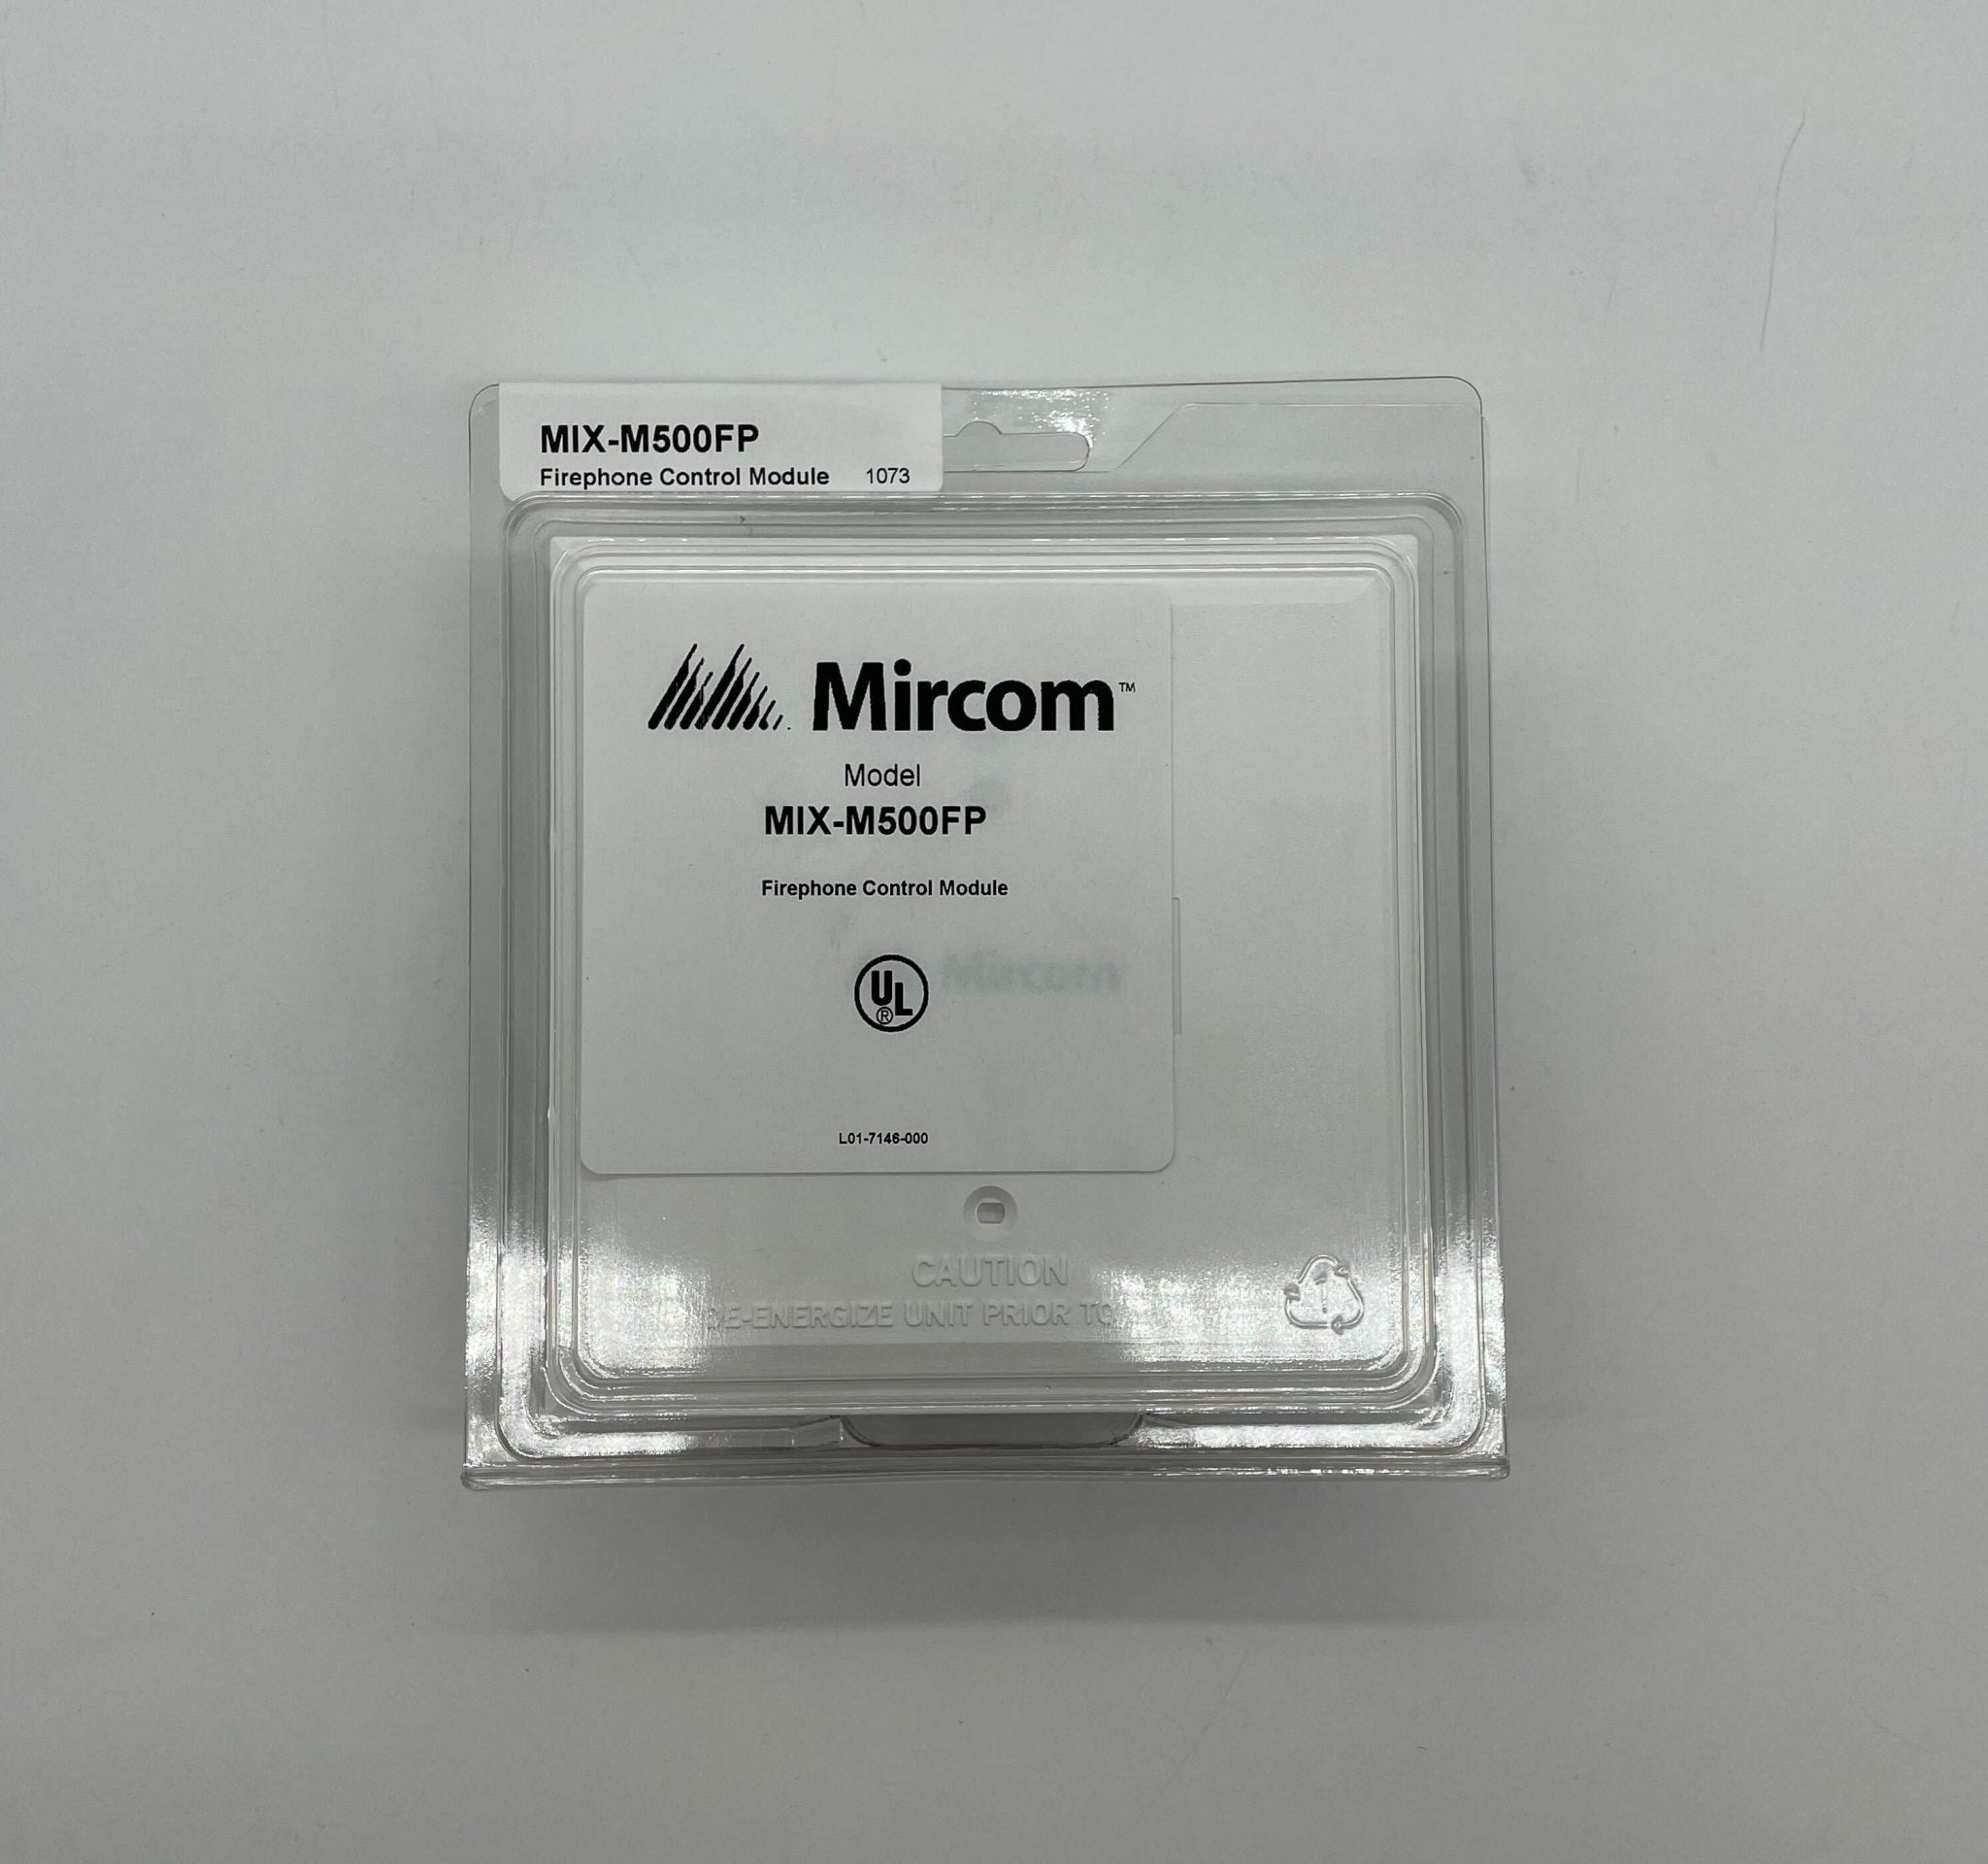 Mircom MIX-M500FP - The Fire Alarm Supplier